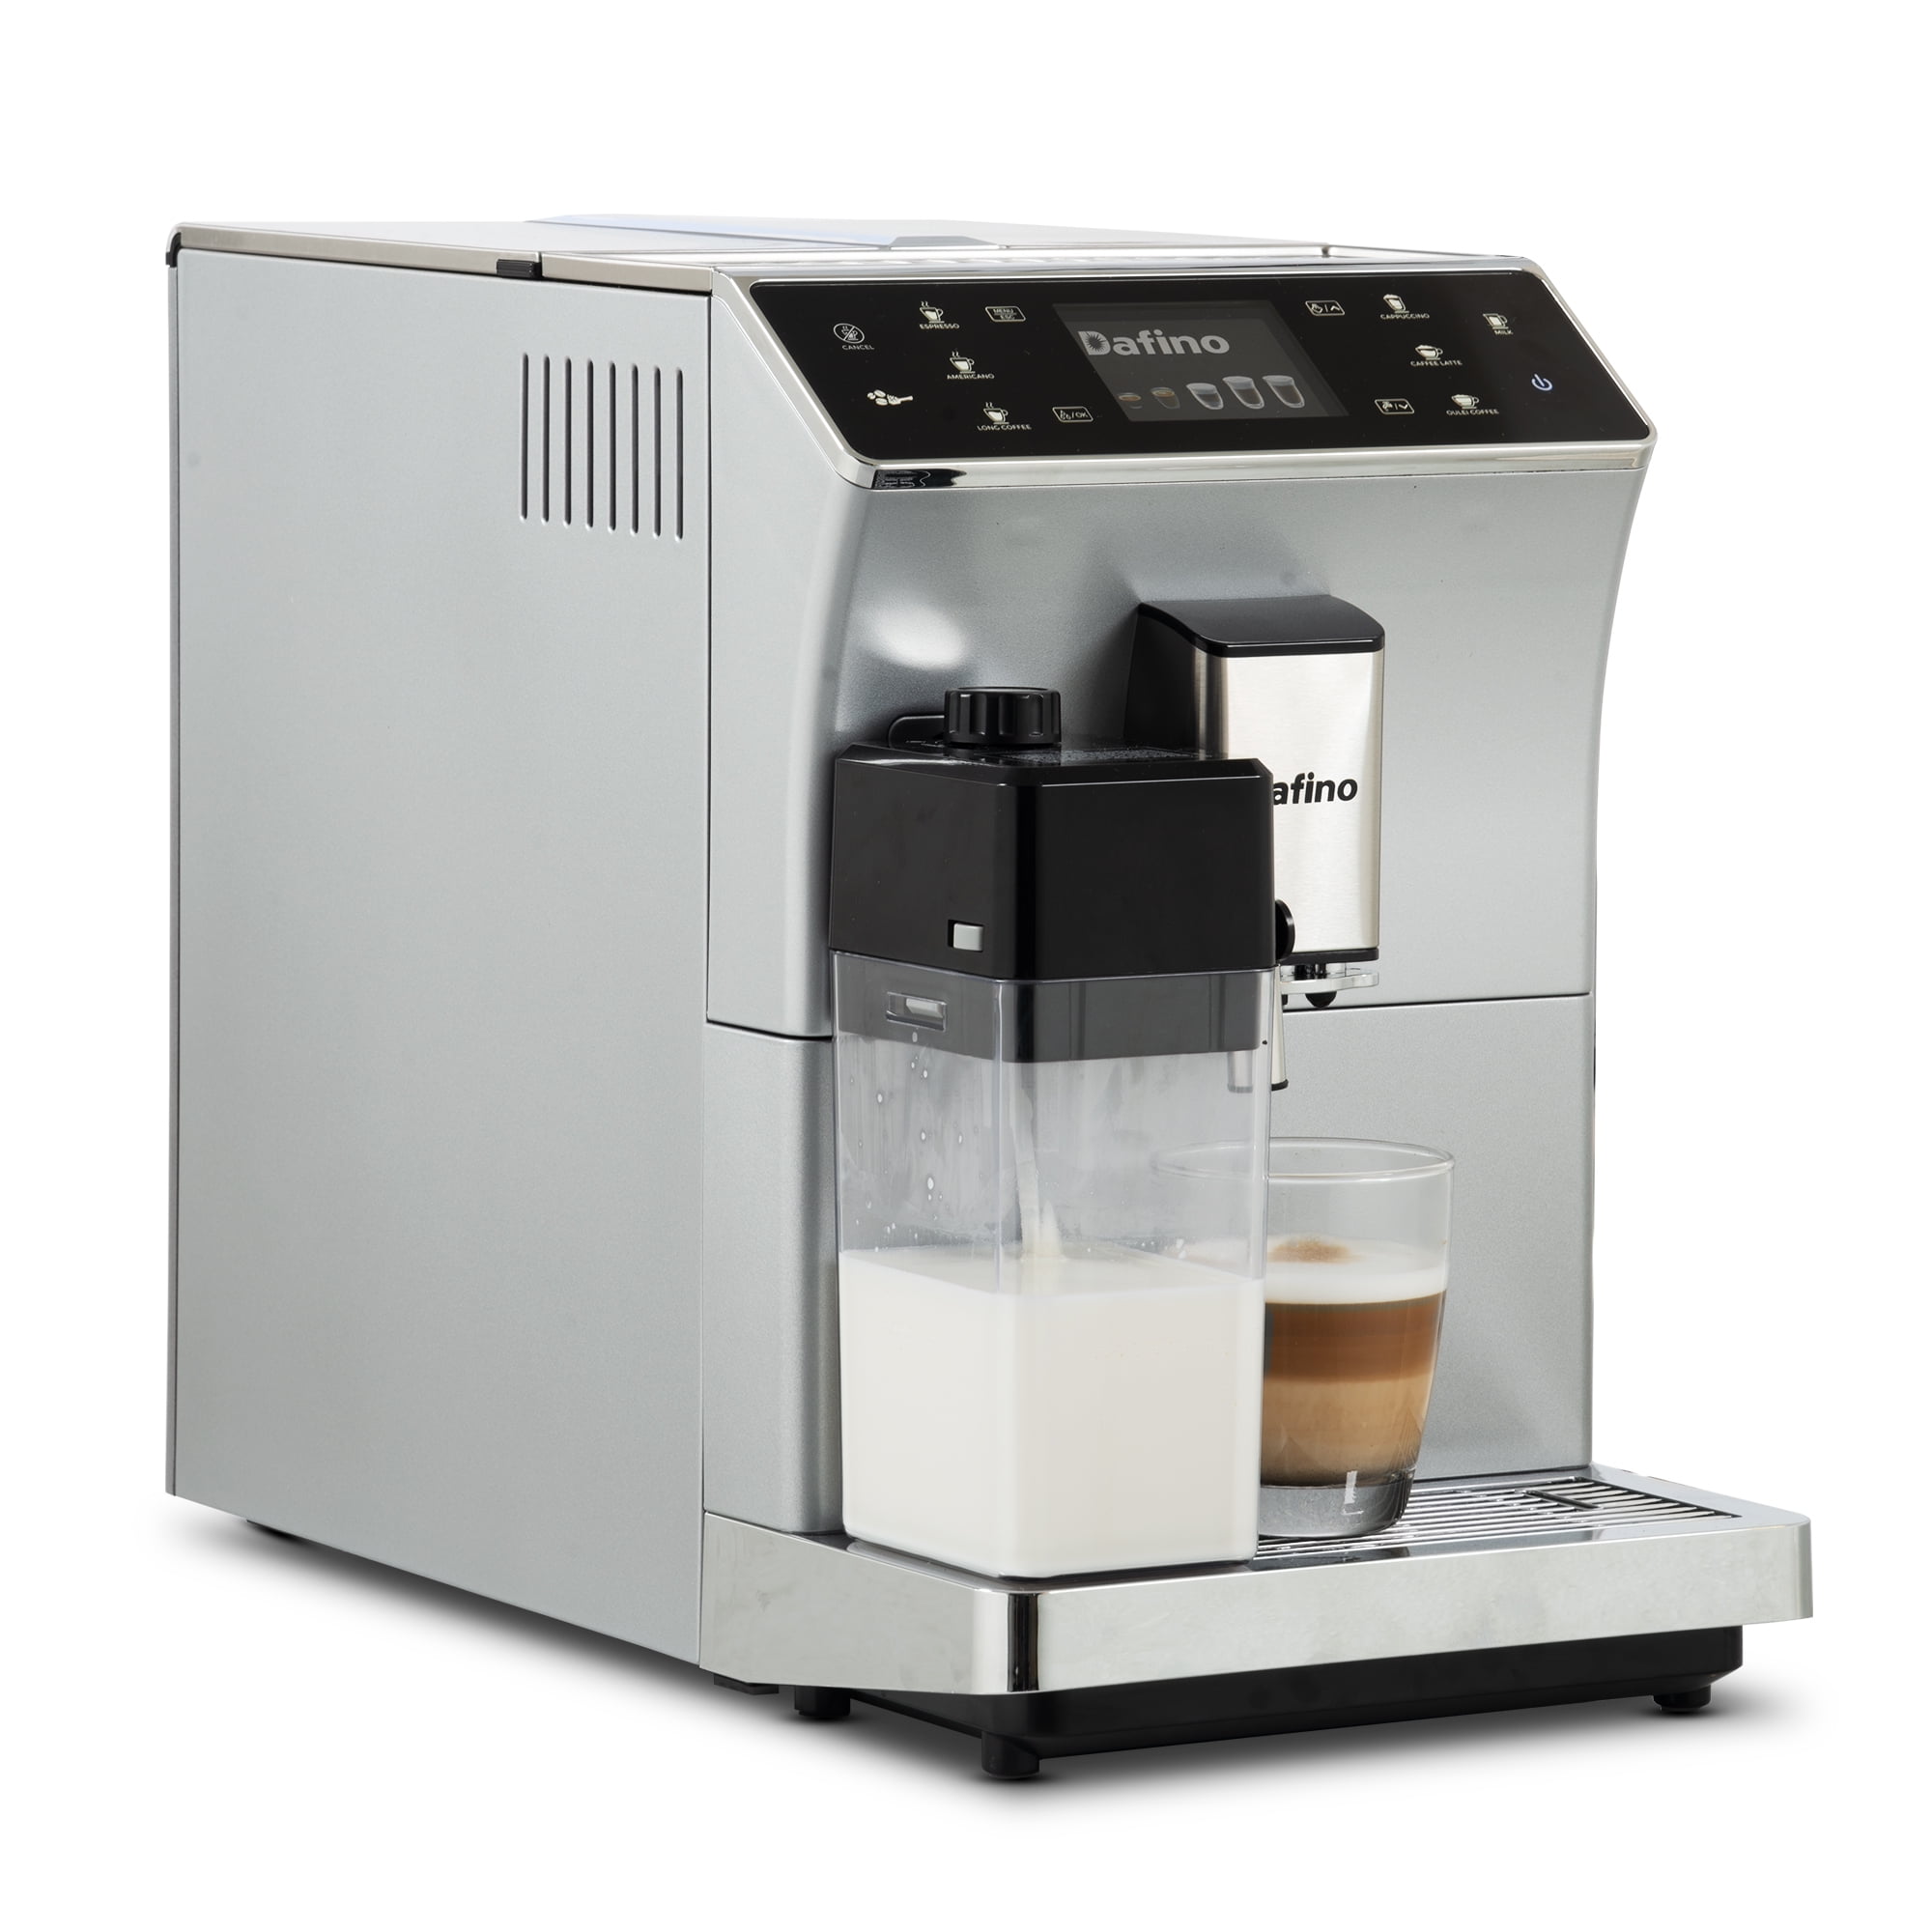 HIZLJJ Espresso Machines,Coffee Machines Office Household American  Multi-function Automatic Drip Coffee Machine Small Coffee Maker Tea Maker  Large